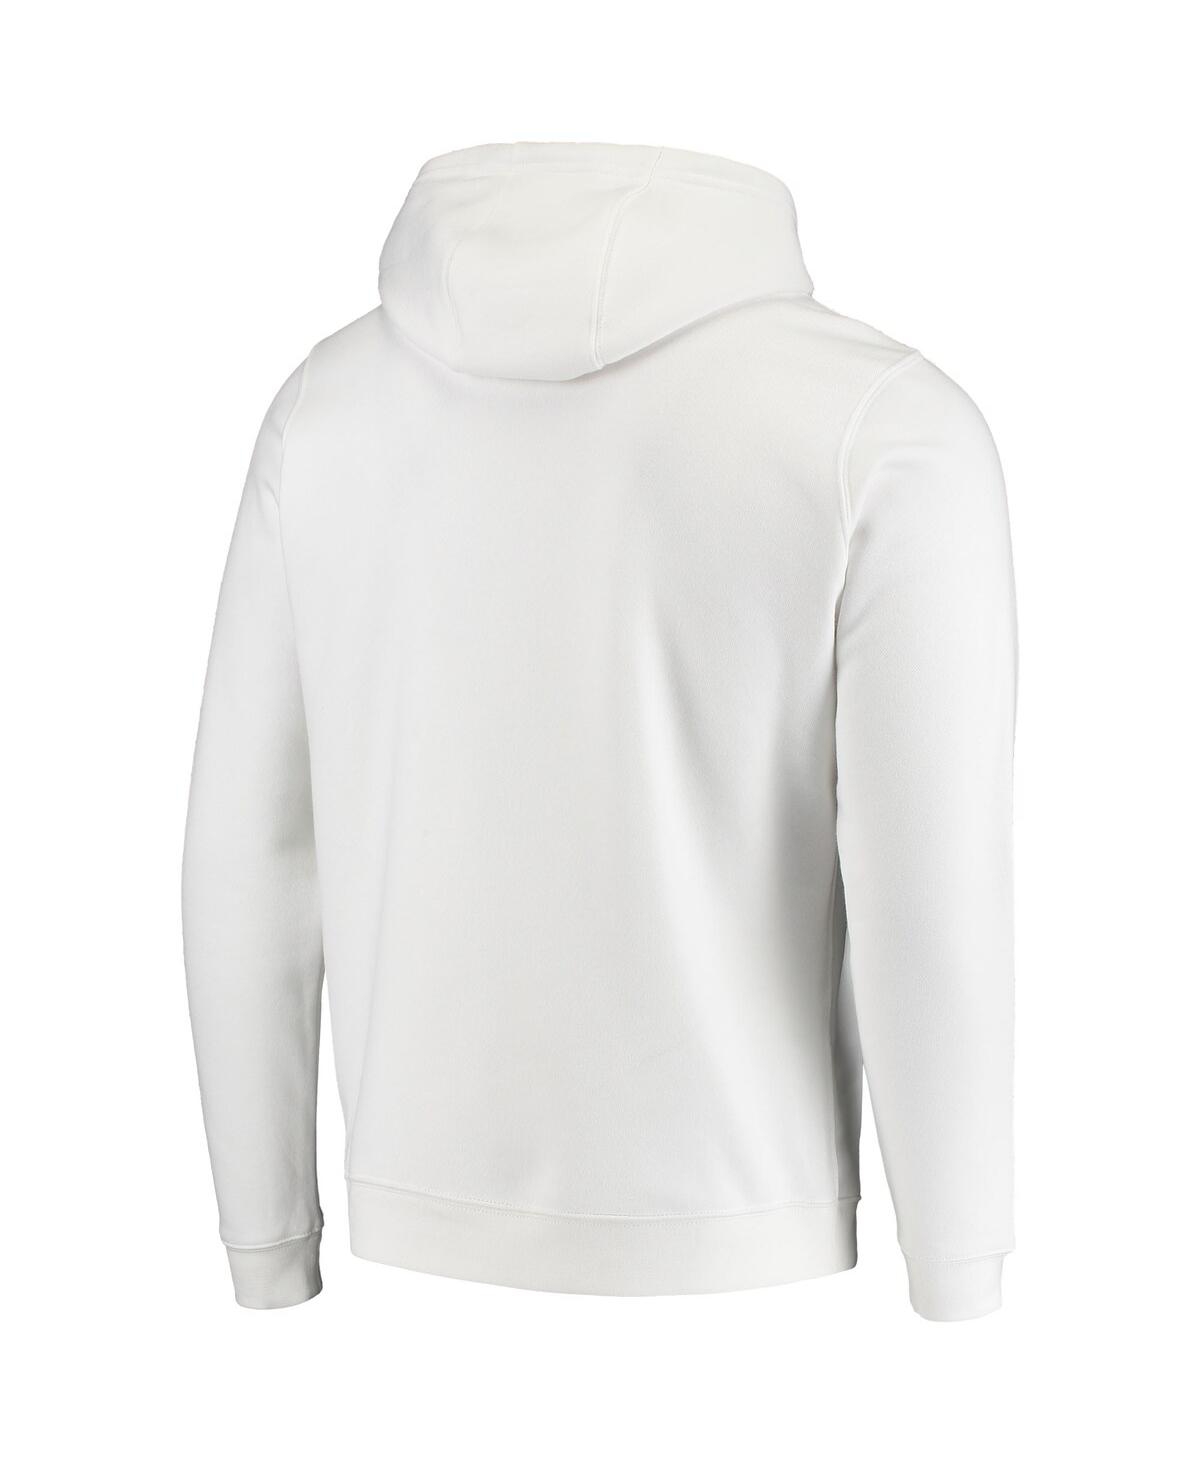 Shop Nike Men's  White Ohio State Buckeyes Vintage-like School Logo Pullover Hoodie